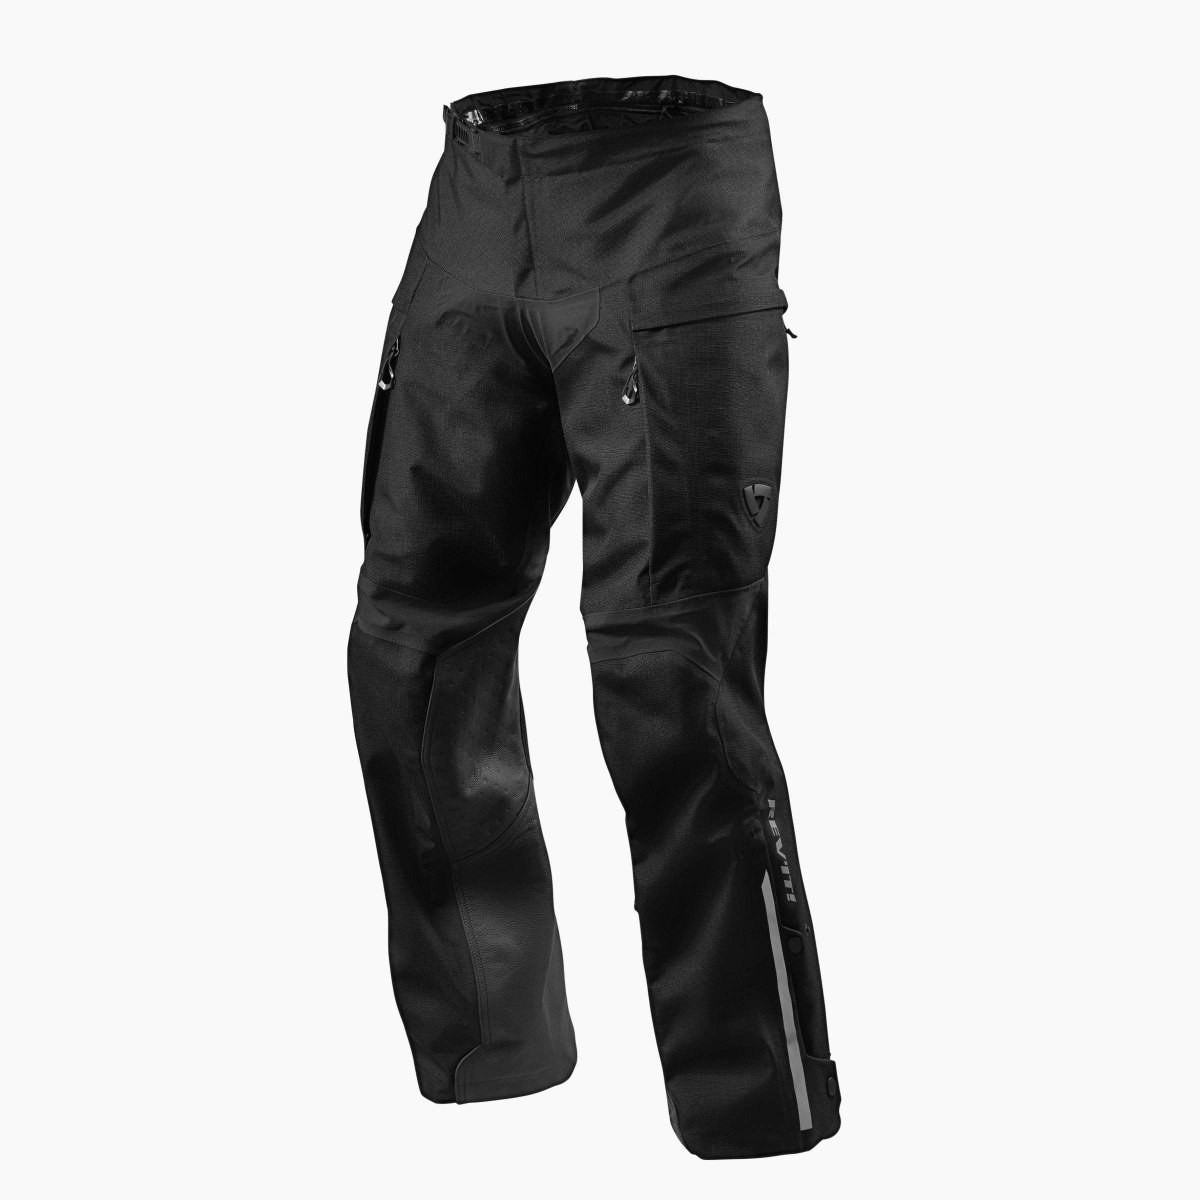 Image of REV'IT! Component H2O Short Black Motorcycle Pants Talla XL